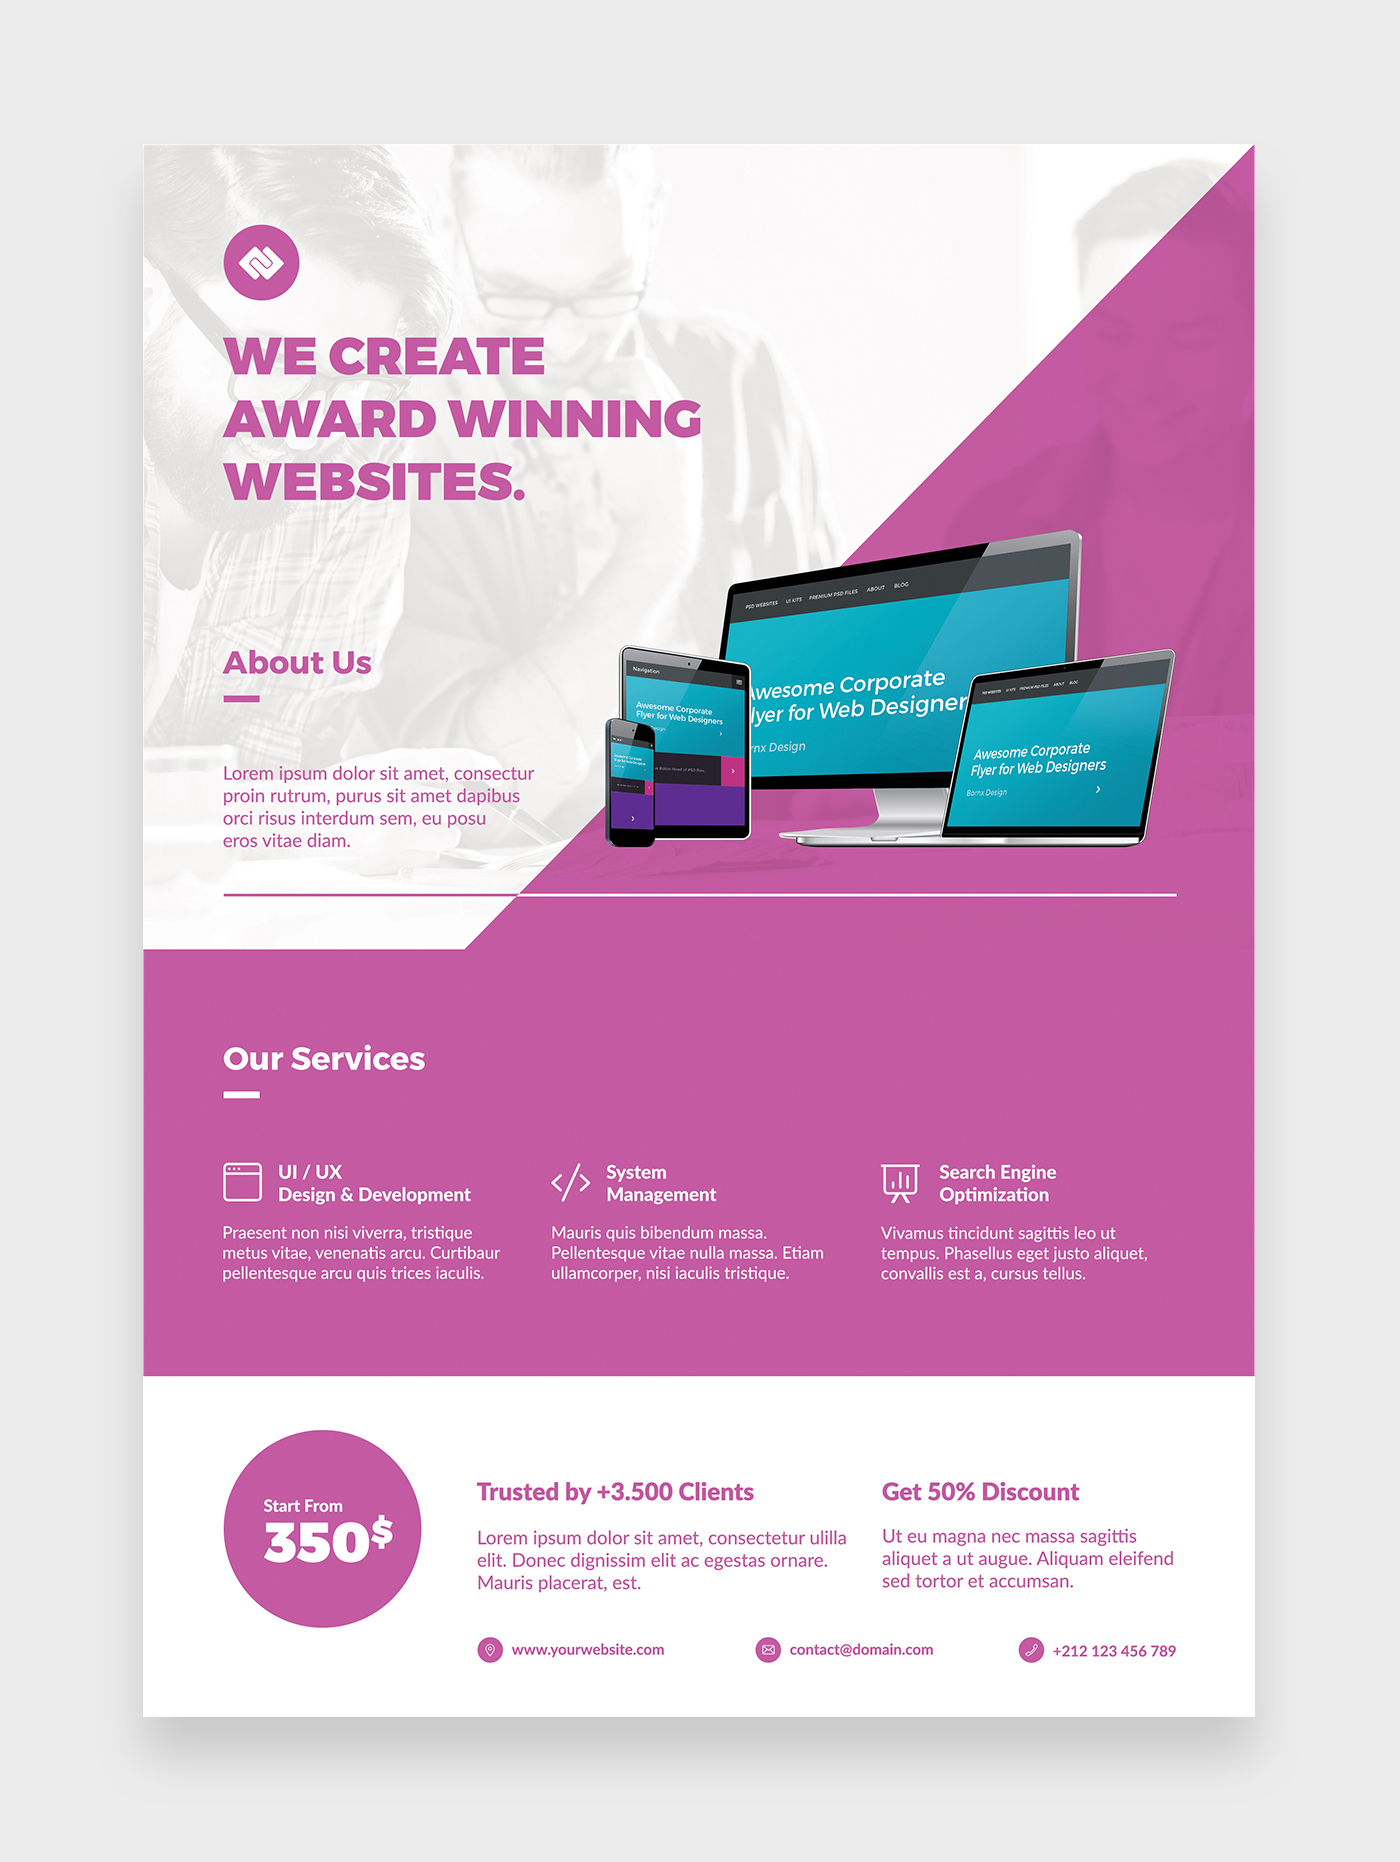 graphicriver envato market creative modern clean professional flyer template corporate Web design designer Promotion promo